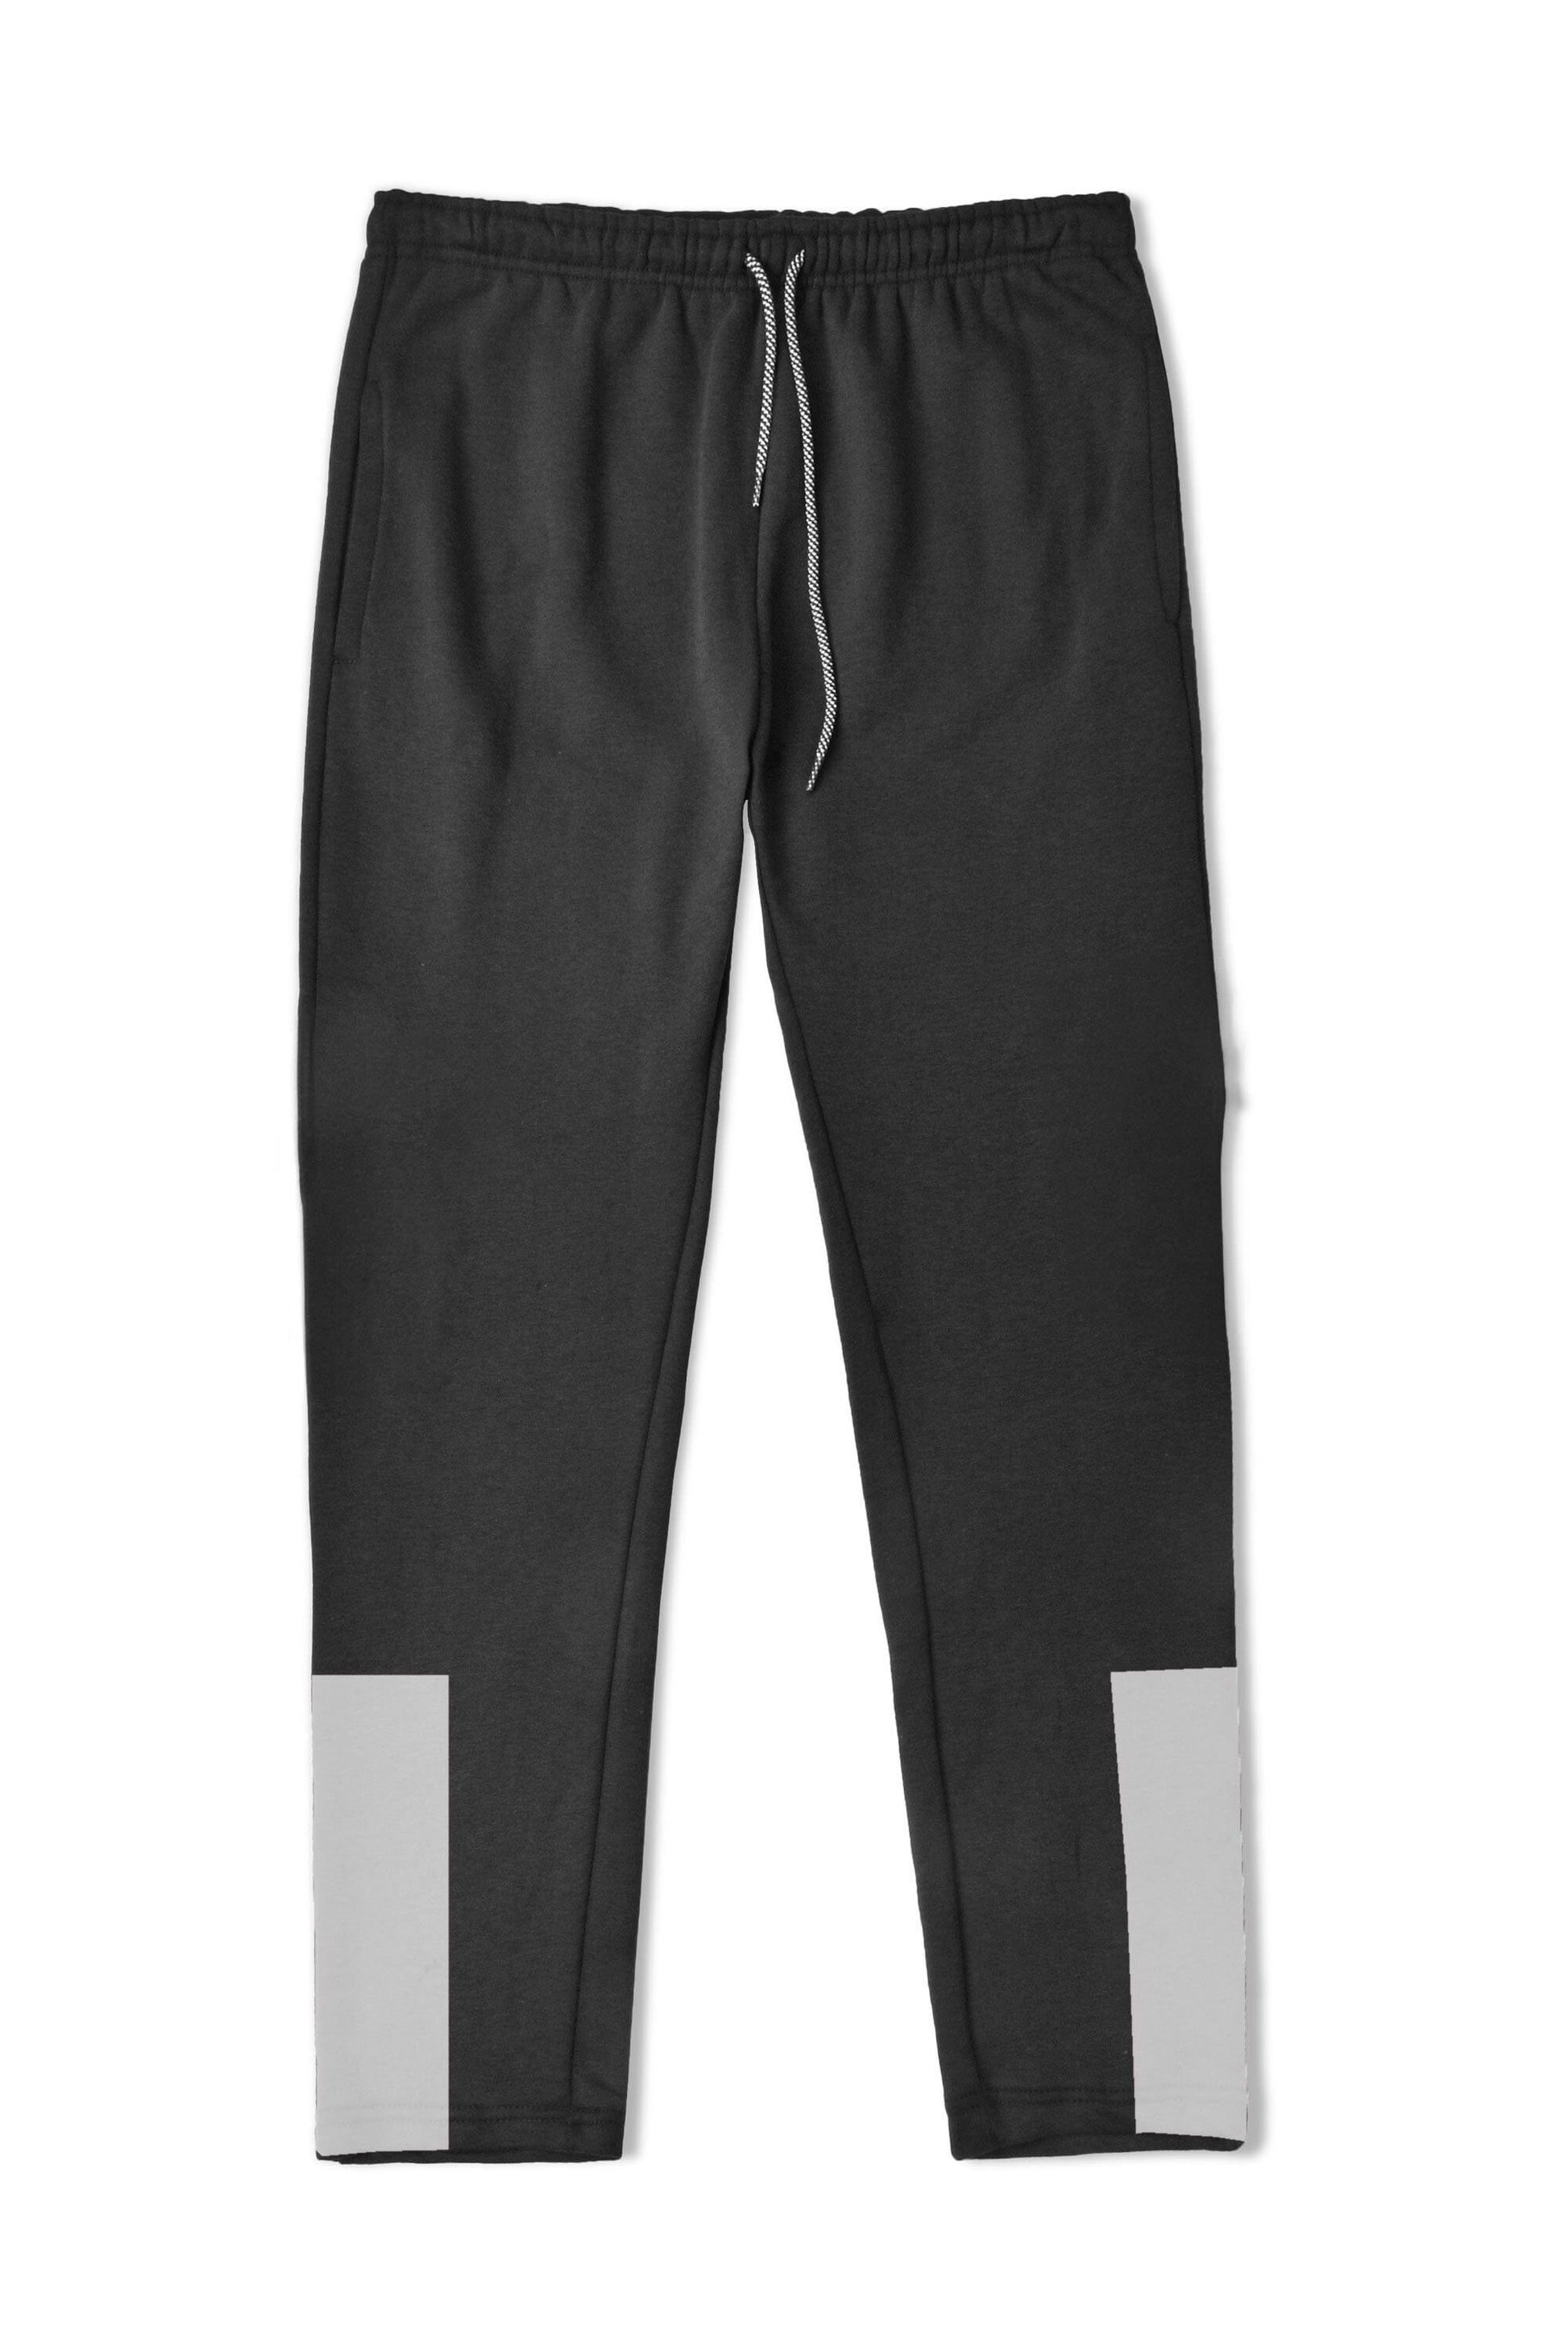 MAX 21 Men's Bottom Panel Style Fleece Trousers Men's Trousers SZK 